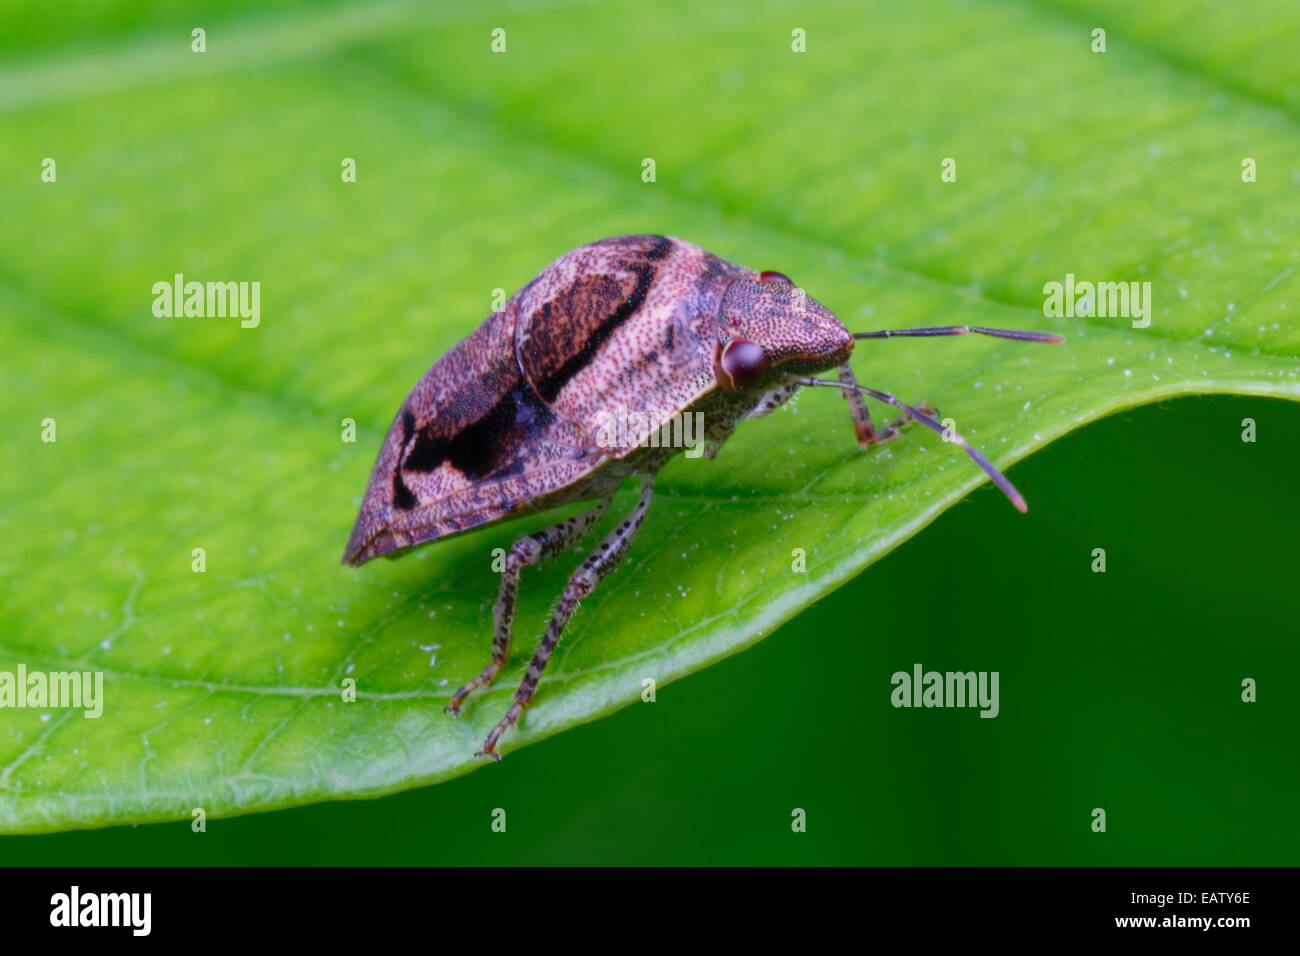 A tiny shield bug nymph crawling on a leaf. Stock Photo